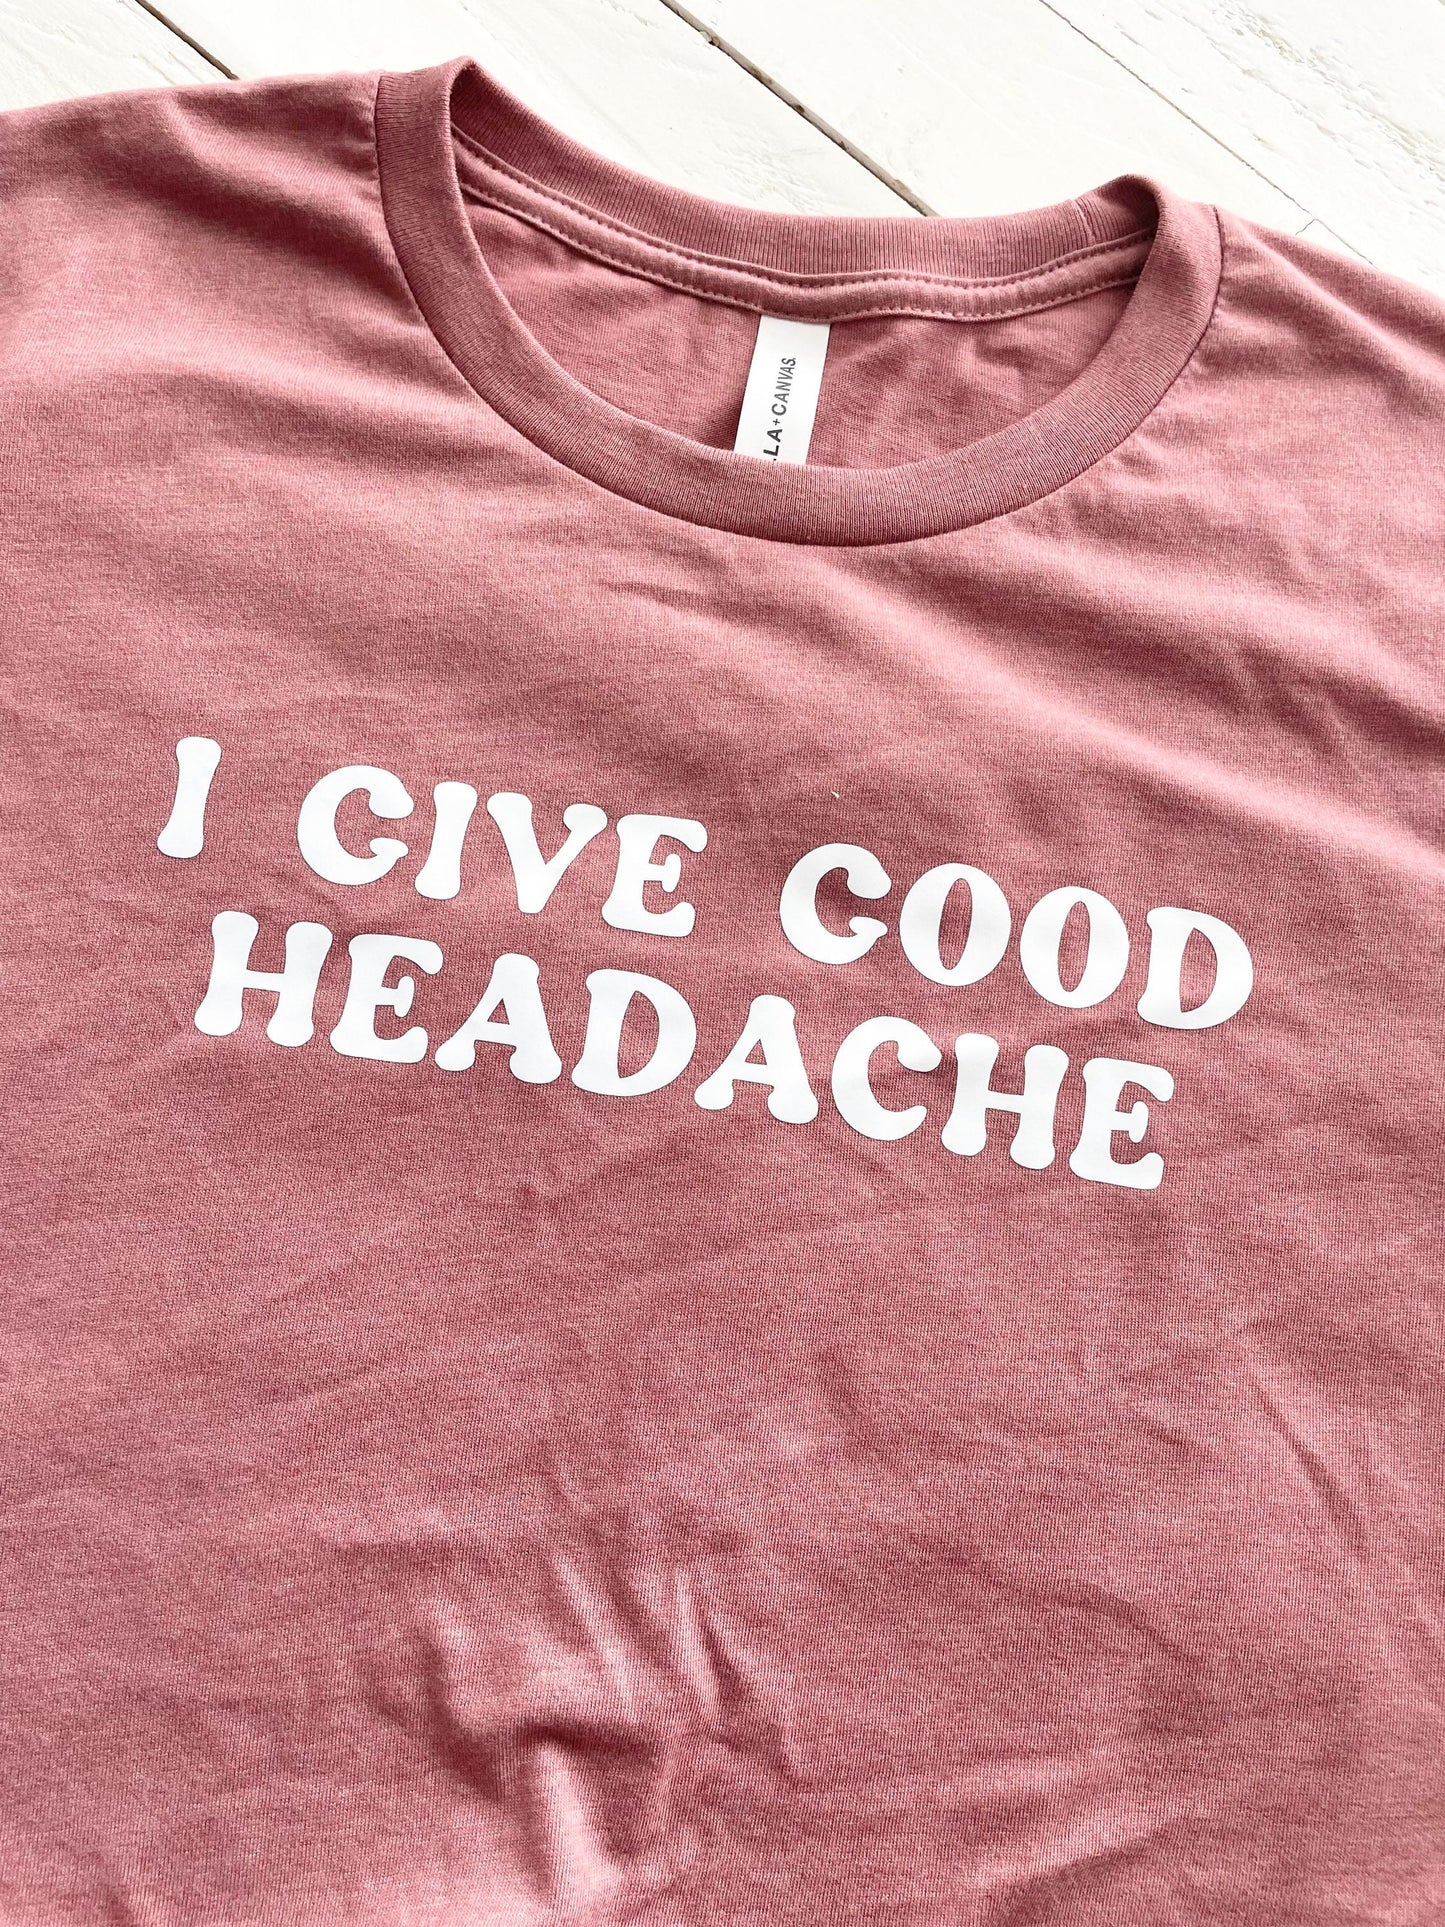 I Give Good Headache, T-shirt